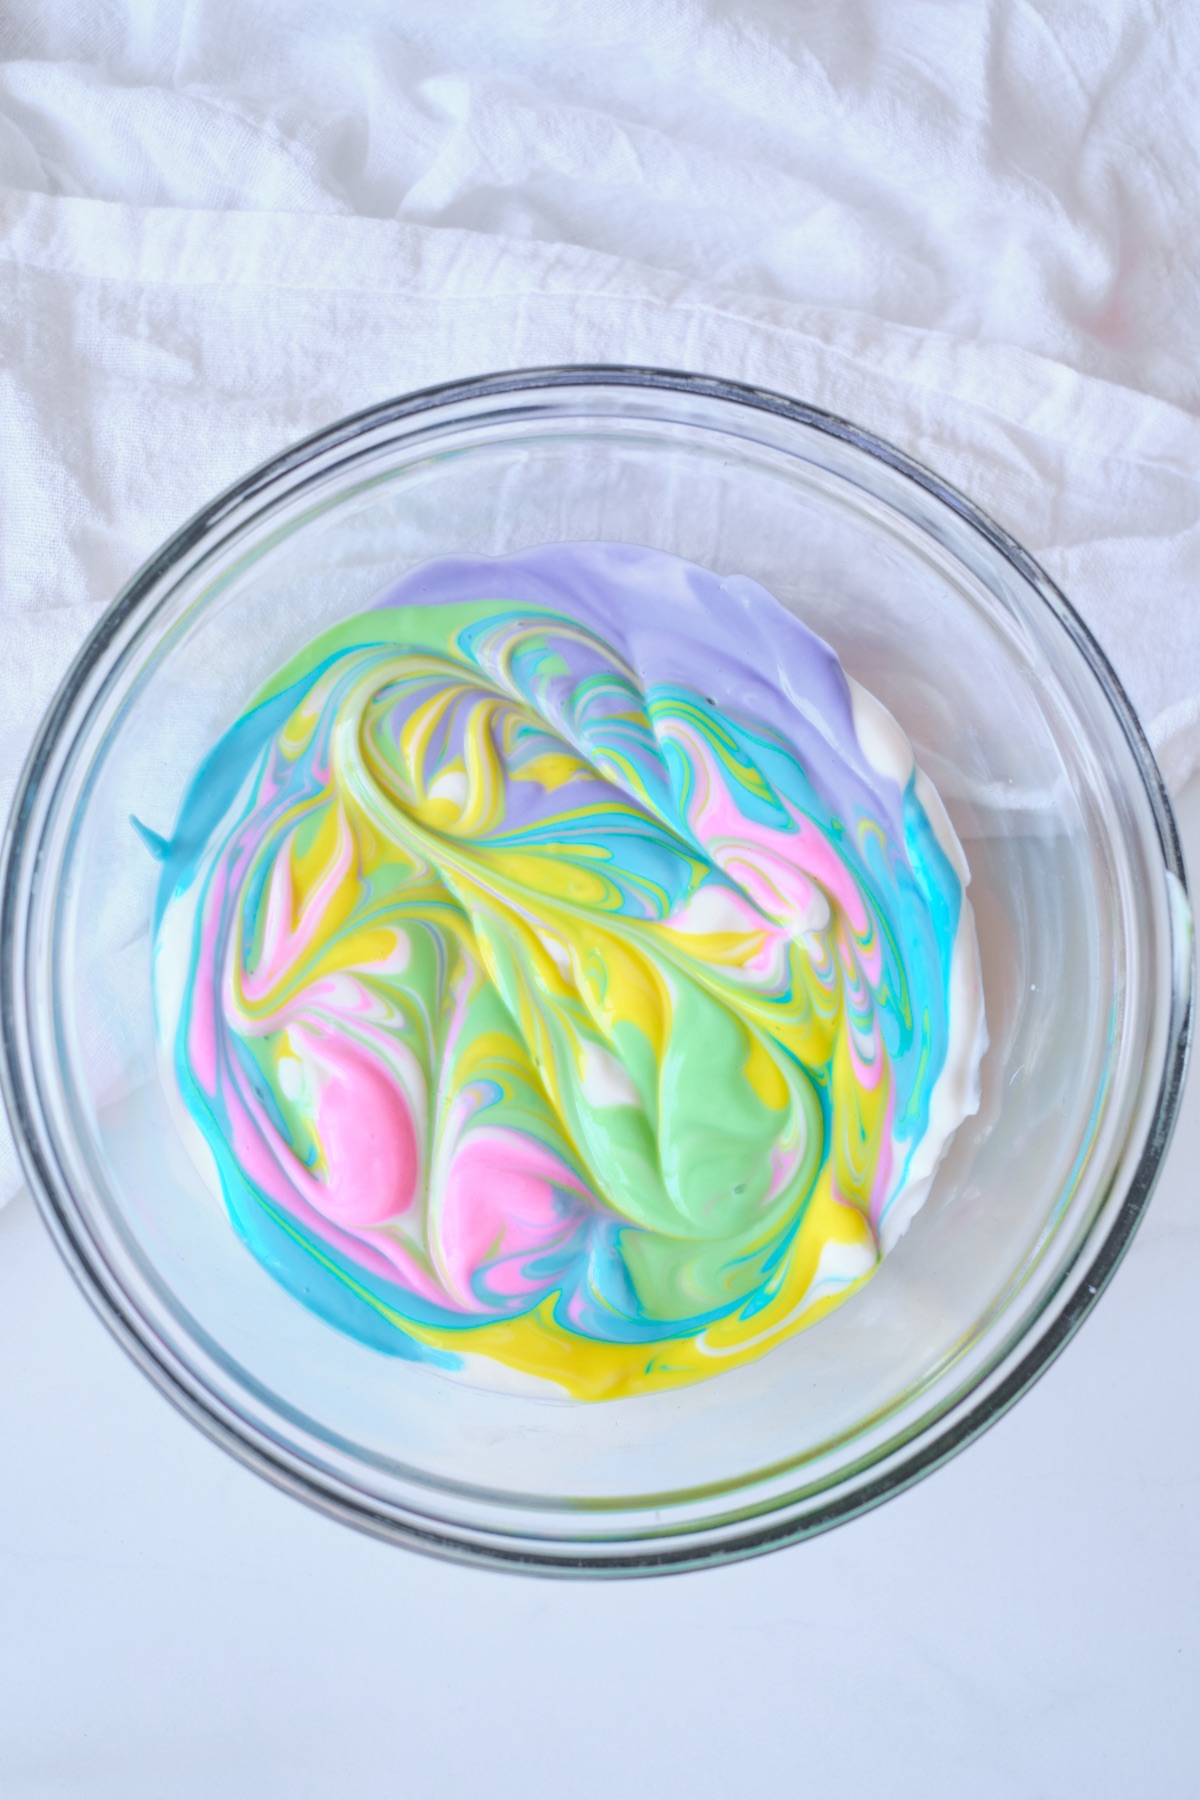 swirl the colors with a knife to make unicorn yogurt